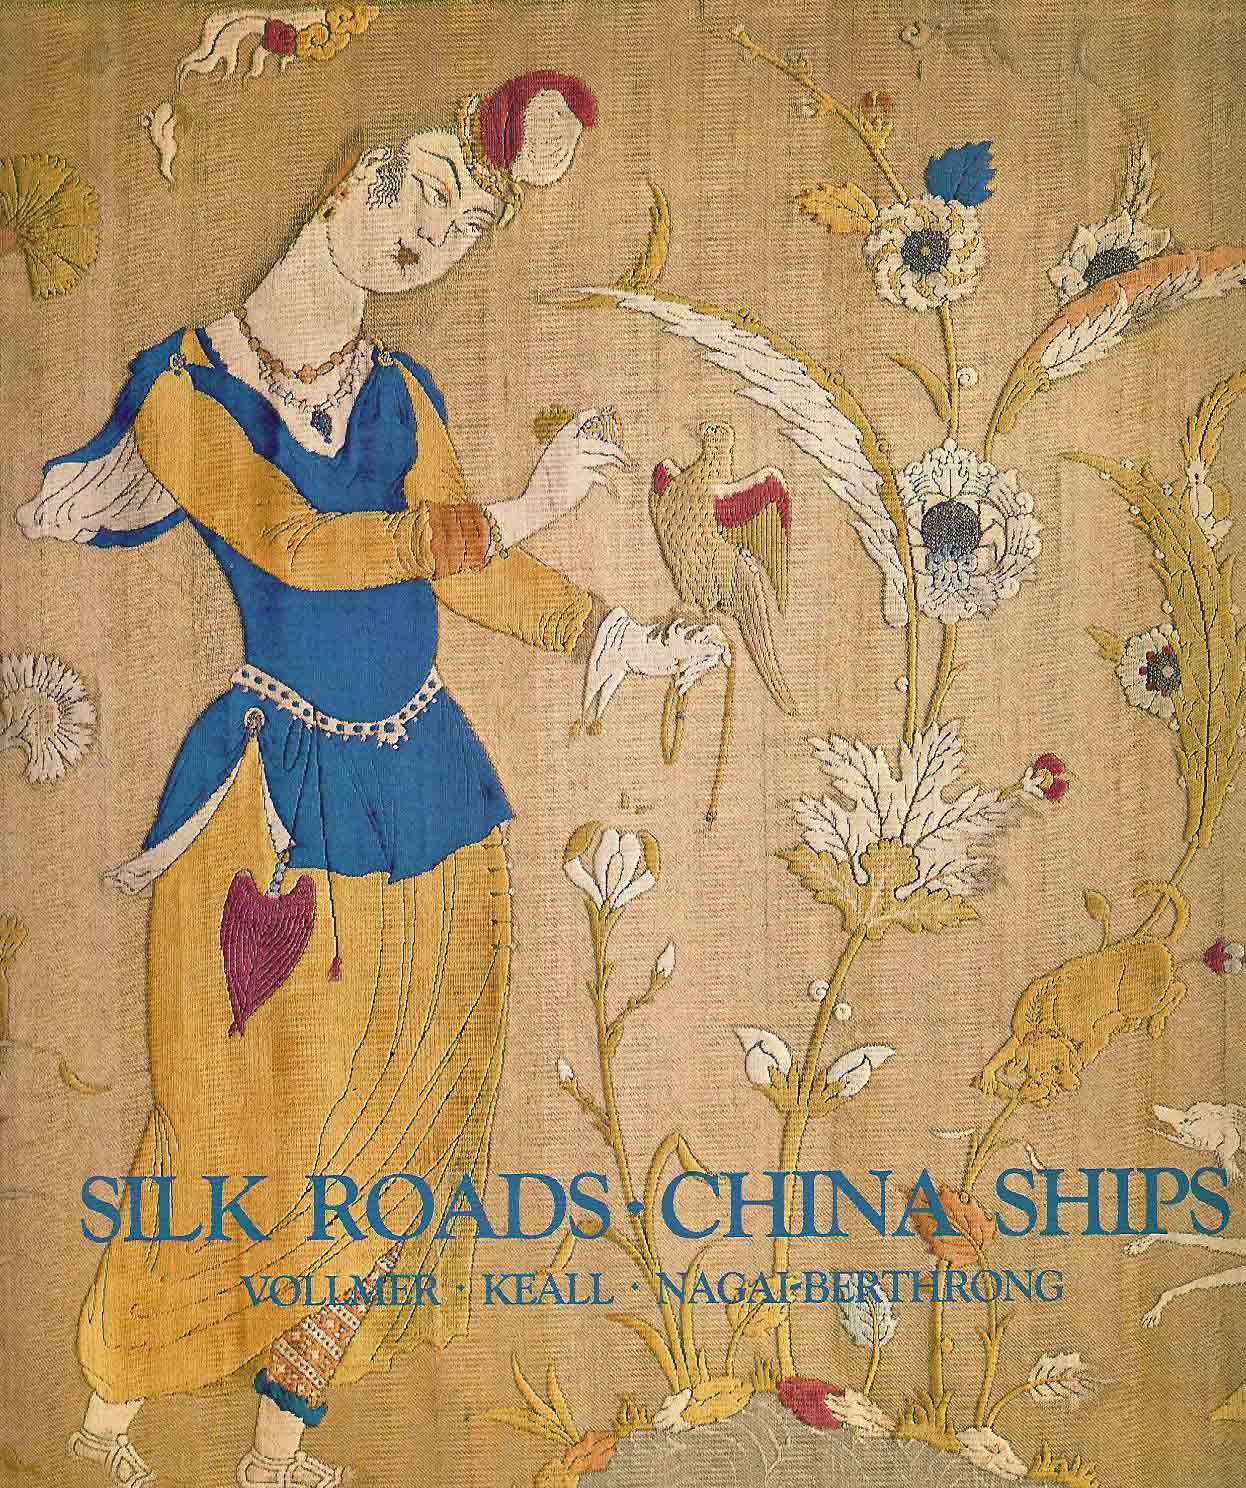 Vollmer, Keall, Nagai-Berthrong - Silk Roads-China Ships - An exhibition of East-West Trade